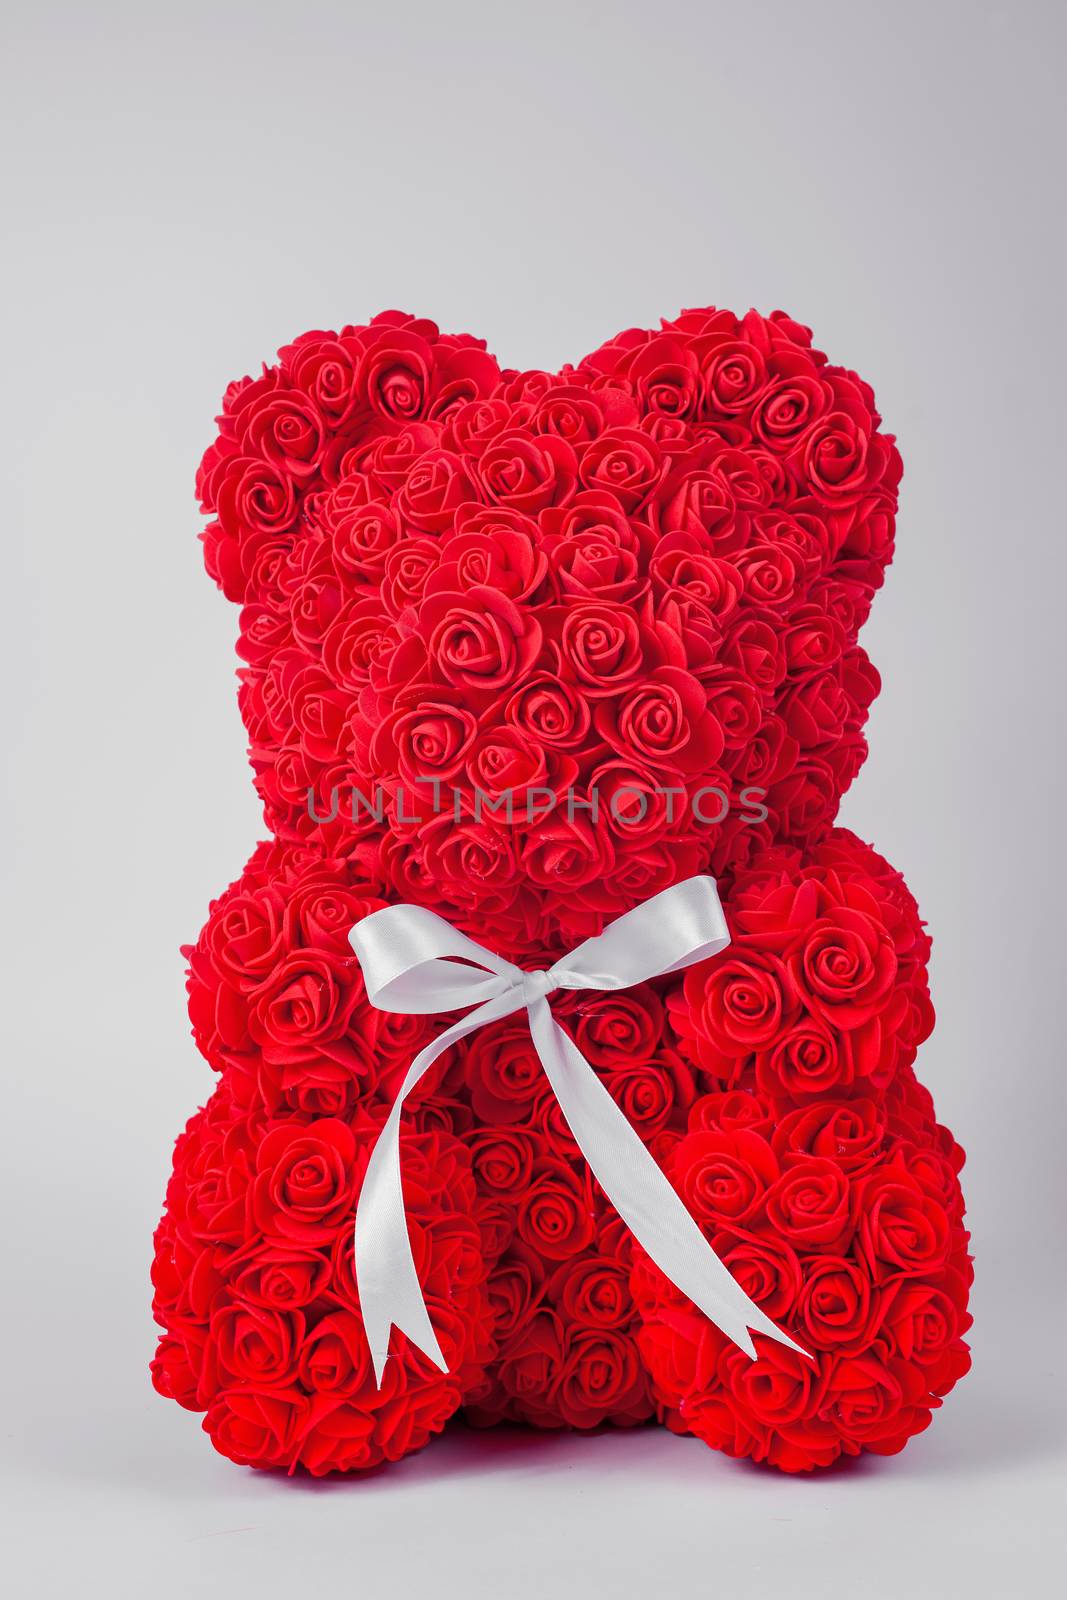 Red  teddy bear toy of foamirane roses. White stripe on teddy neck. Stock photo isolated on white background.